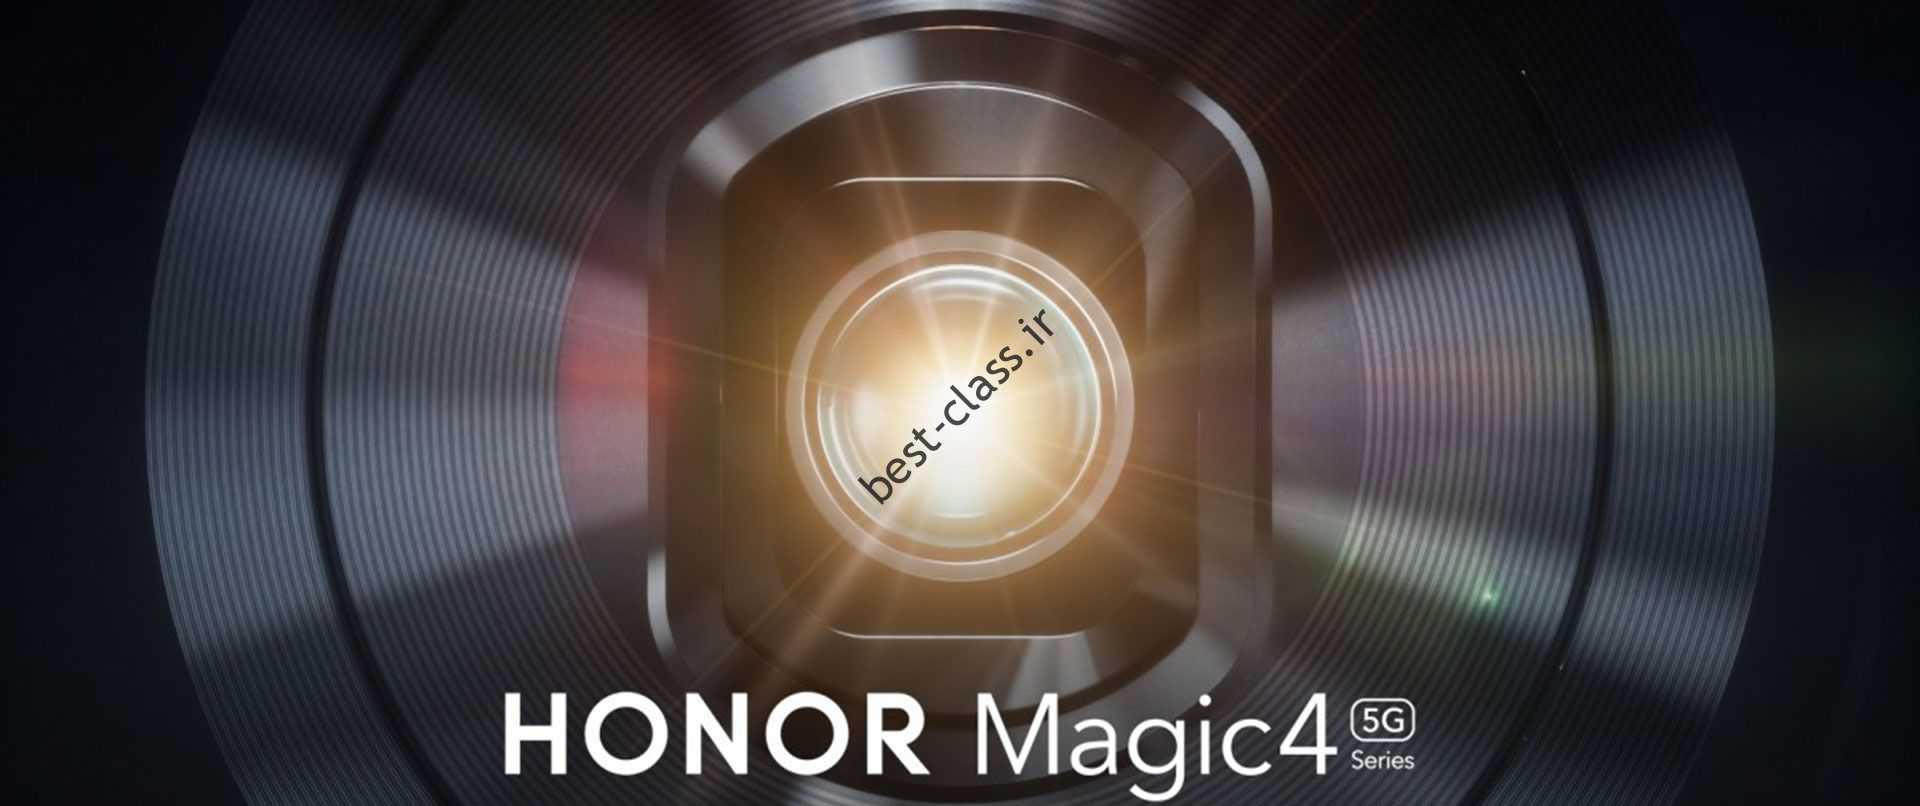 Honor Magic Family 4